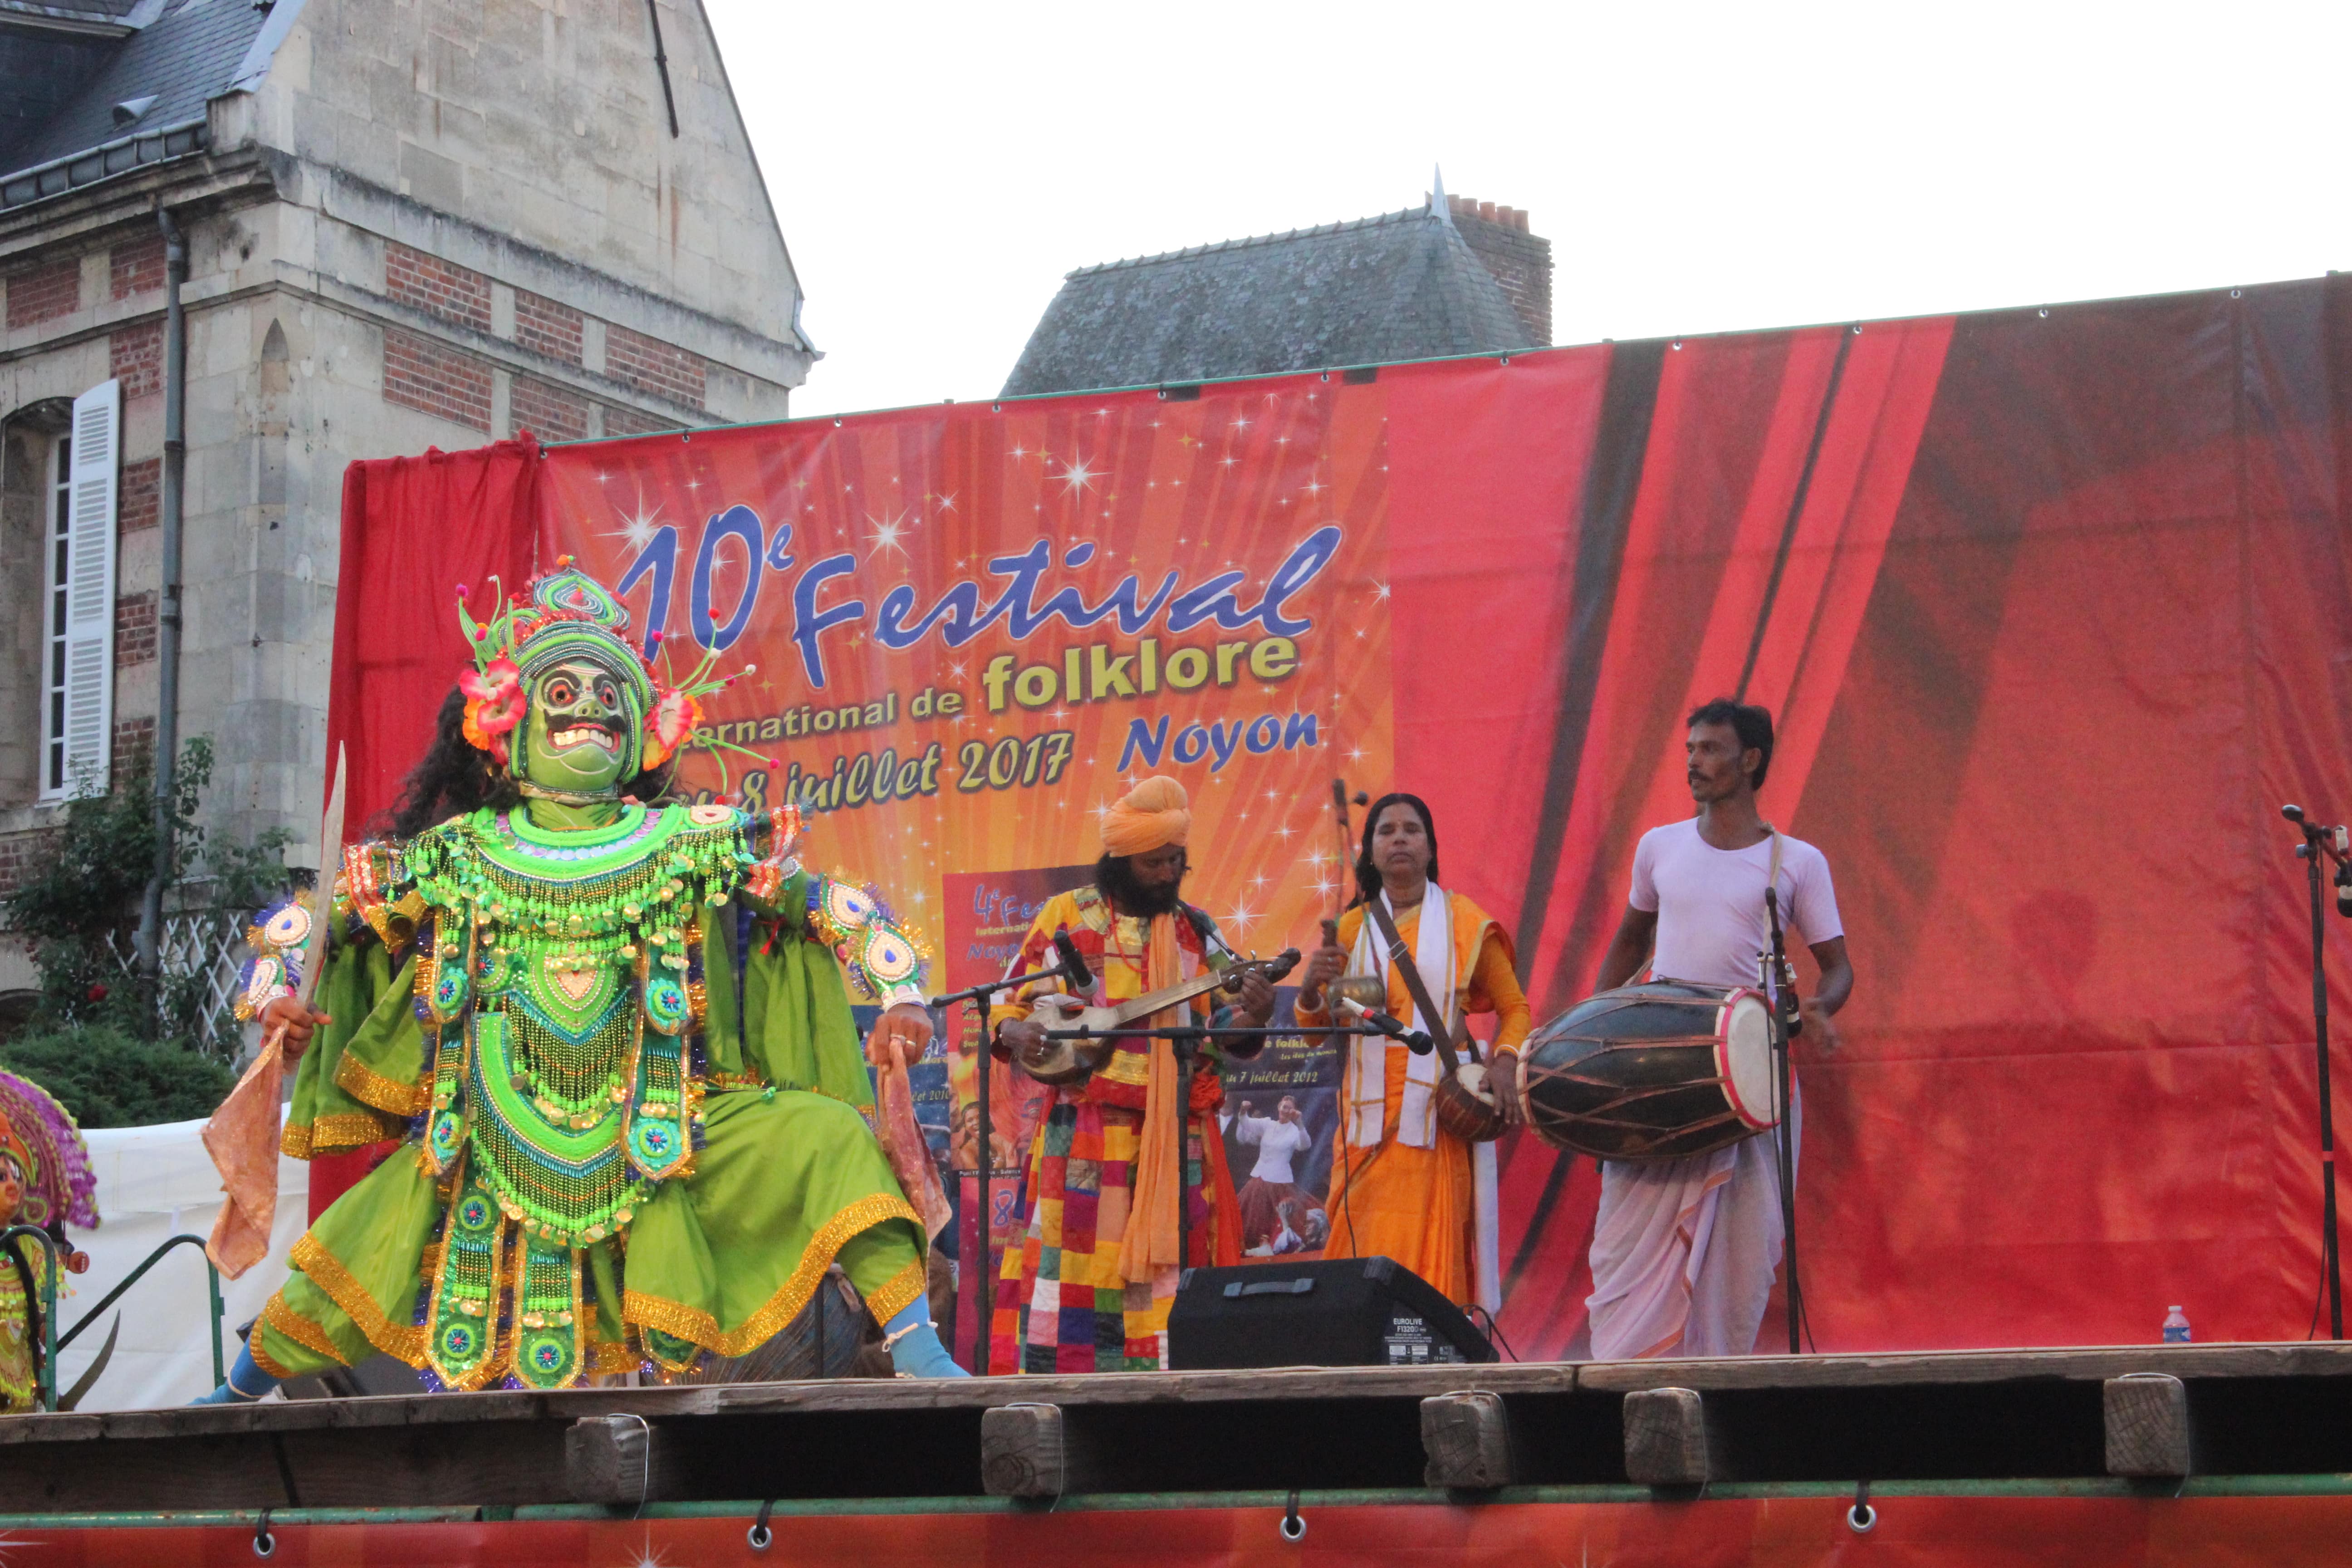 International Folklore Festival, France, 2017